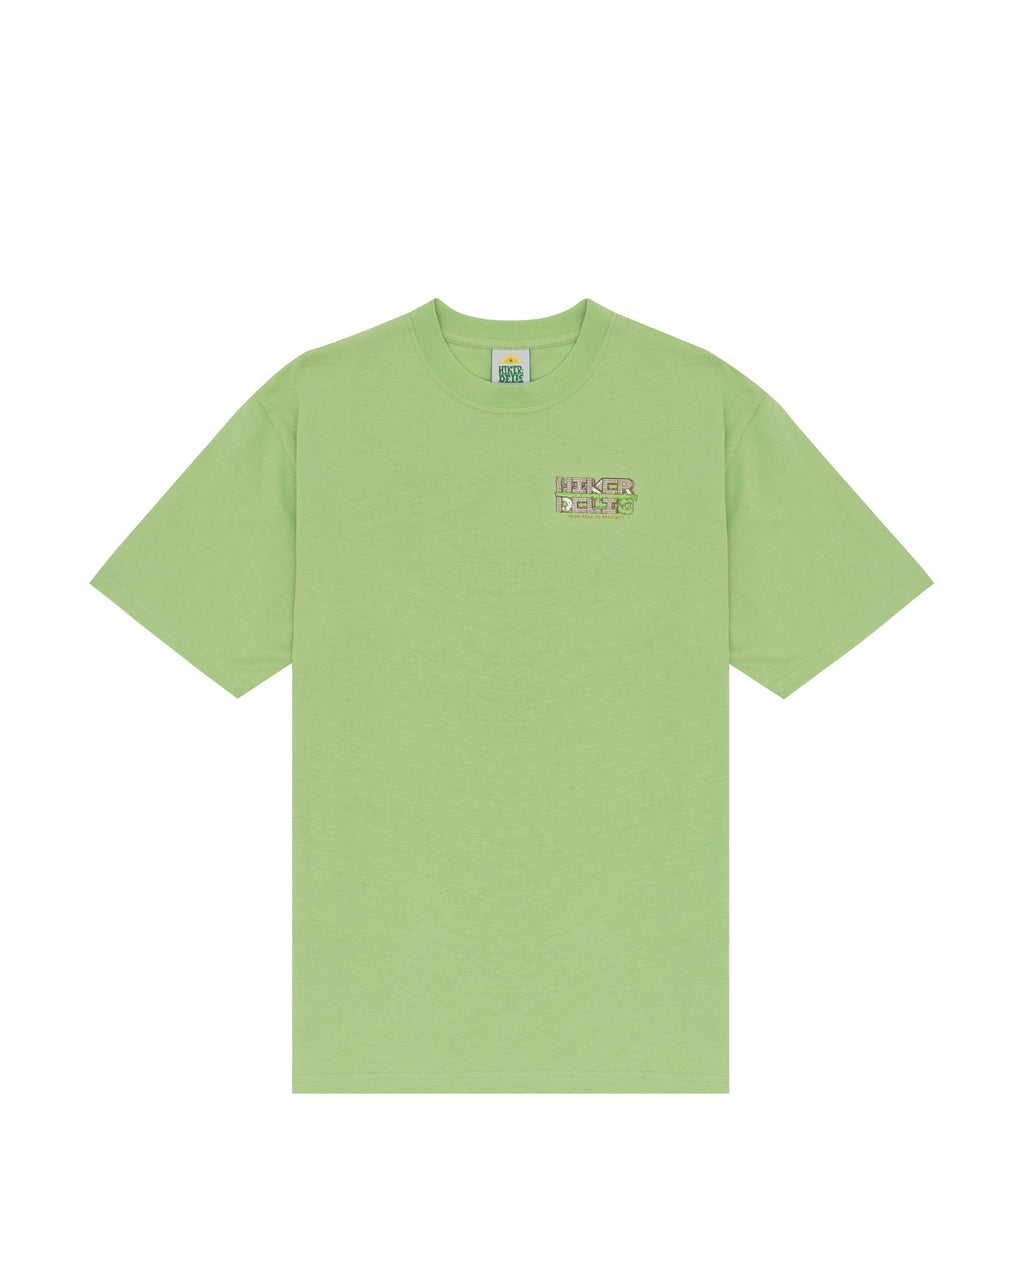 Hikerdelic Solar Punk SS T-Shirt Lime